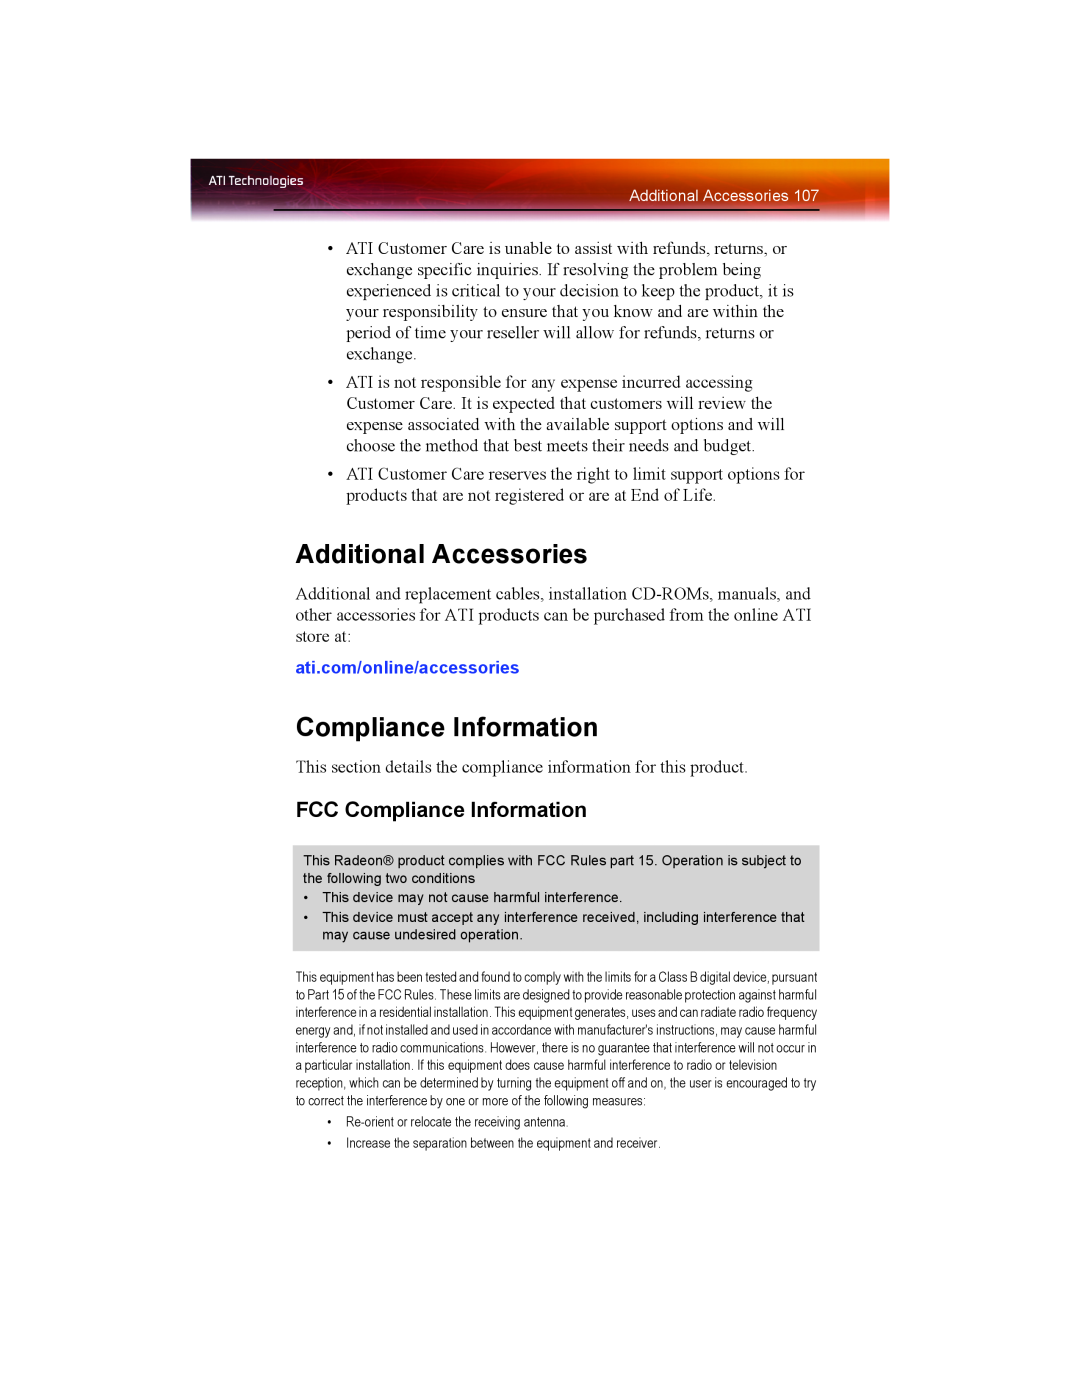 ATI Technologies X1550 SERIES manual Additional Accessories, FCC Compliance Information, ati.com/online/accessories 